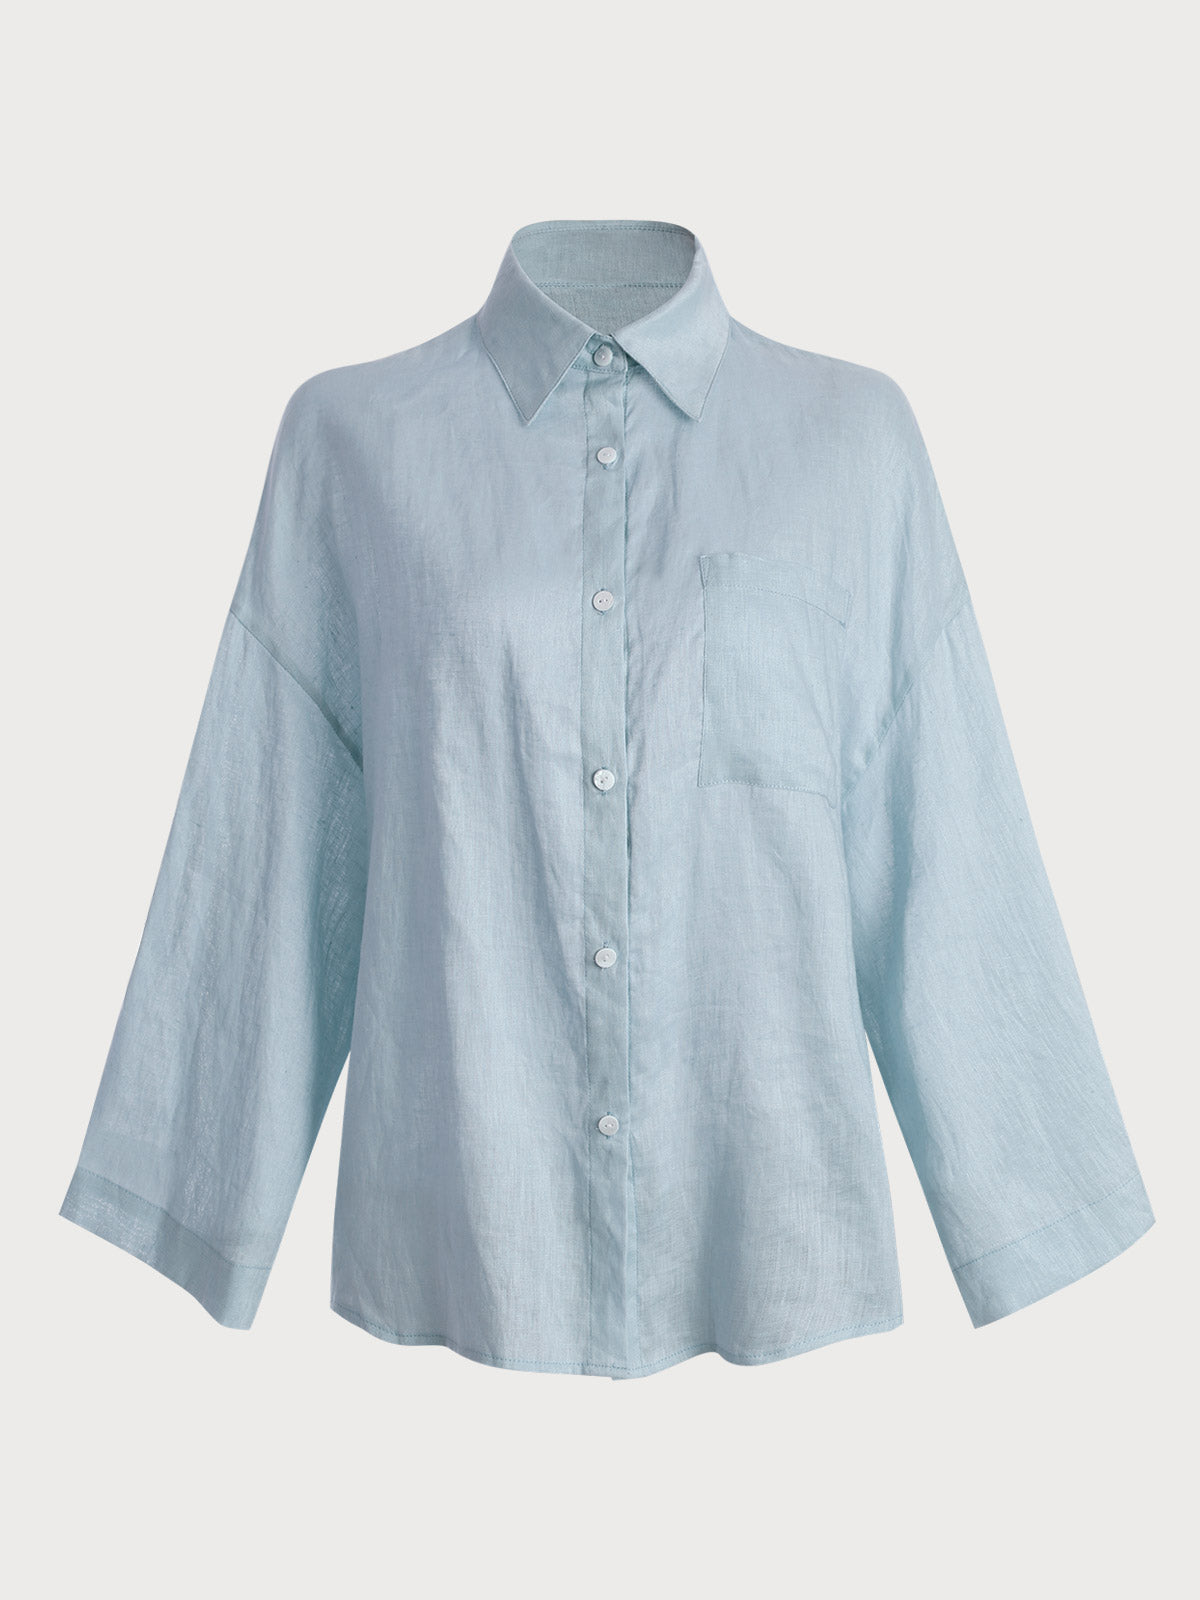 Blue Solid Pocket Flax Shirt & Reviews - Purple,Green,Sky Blue ...